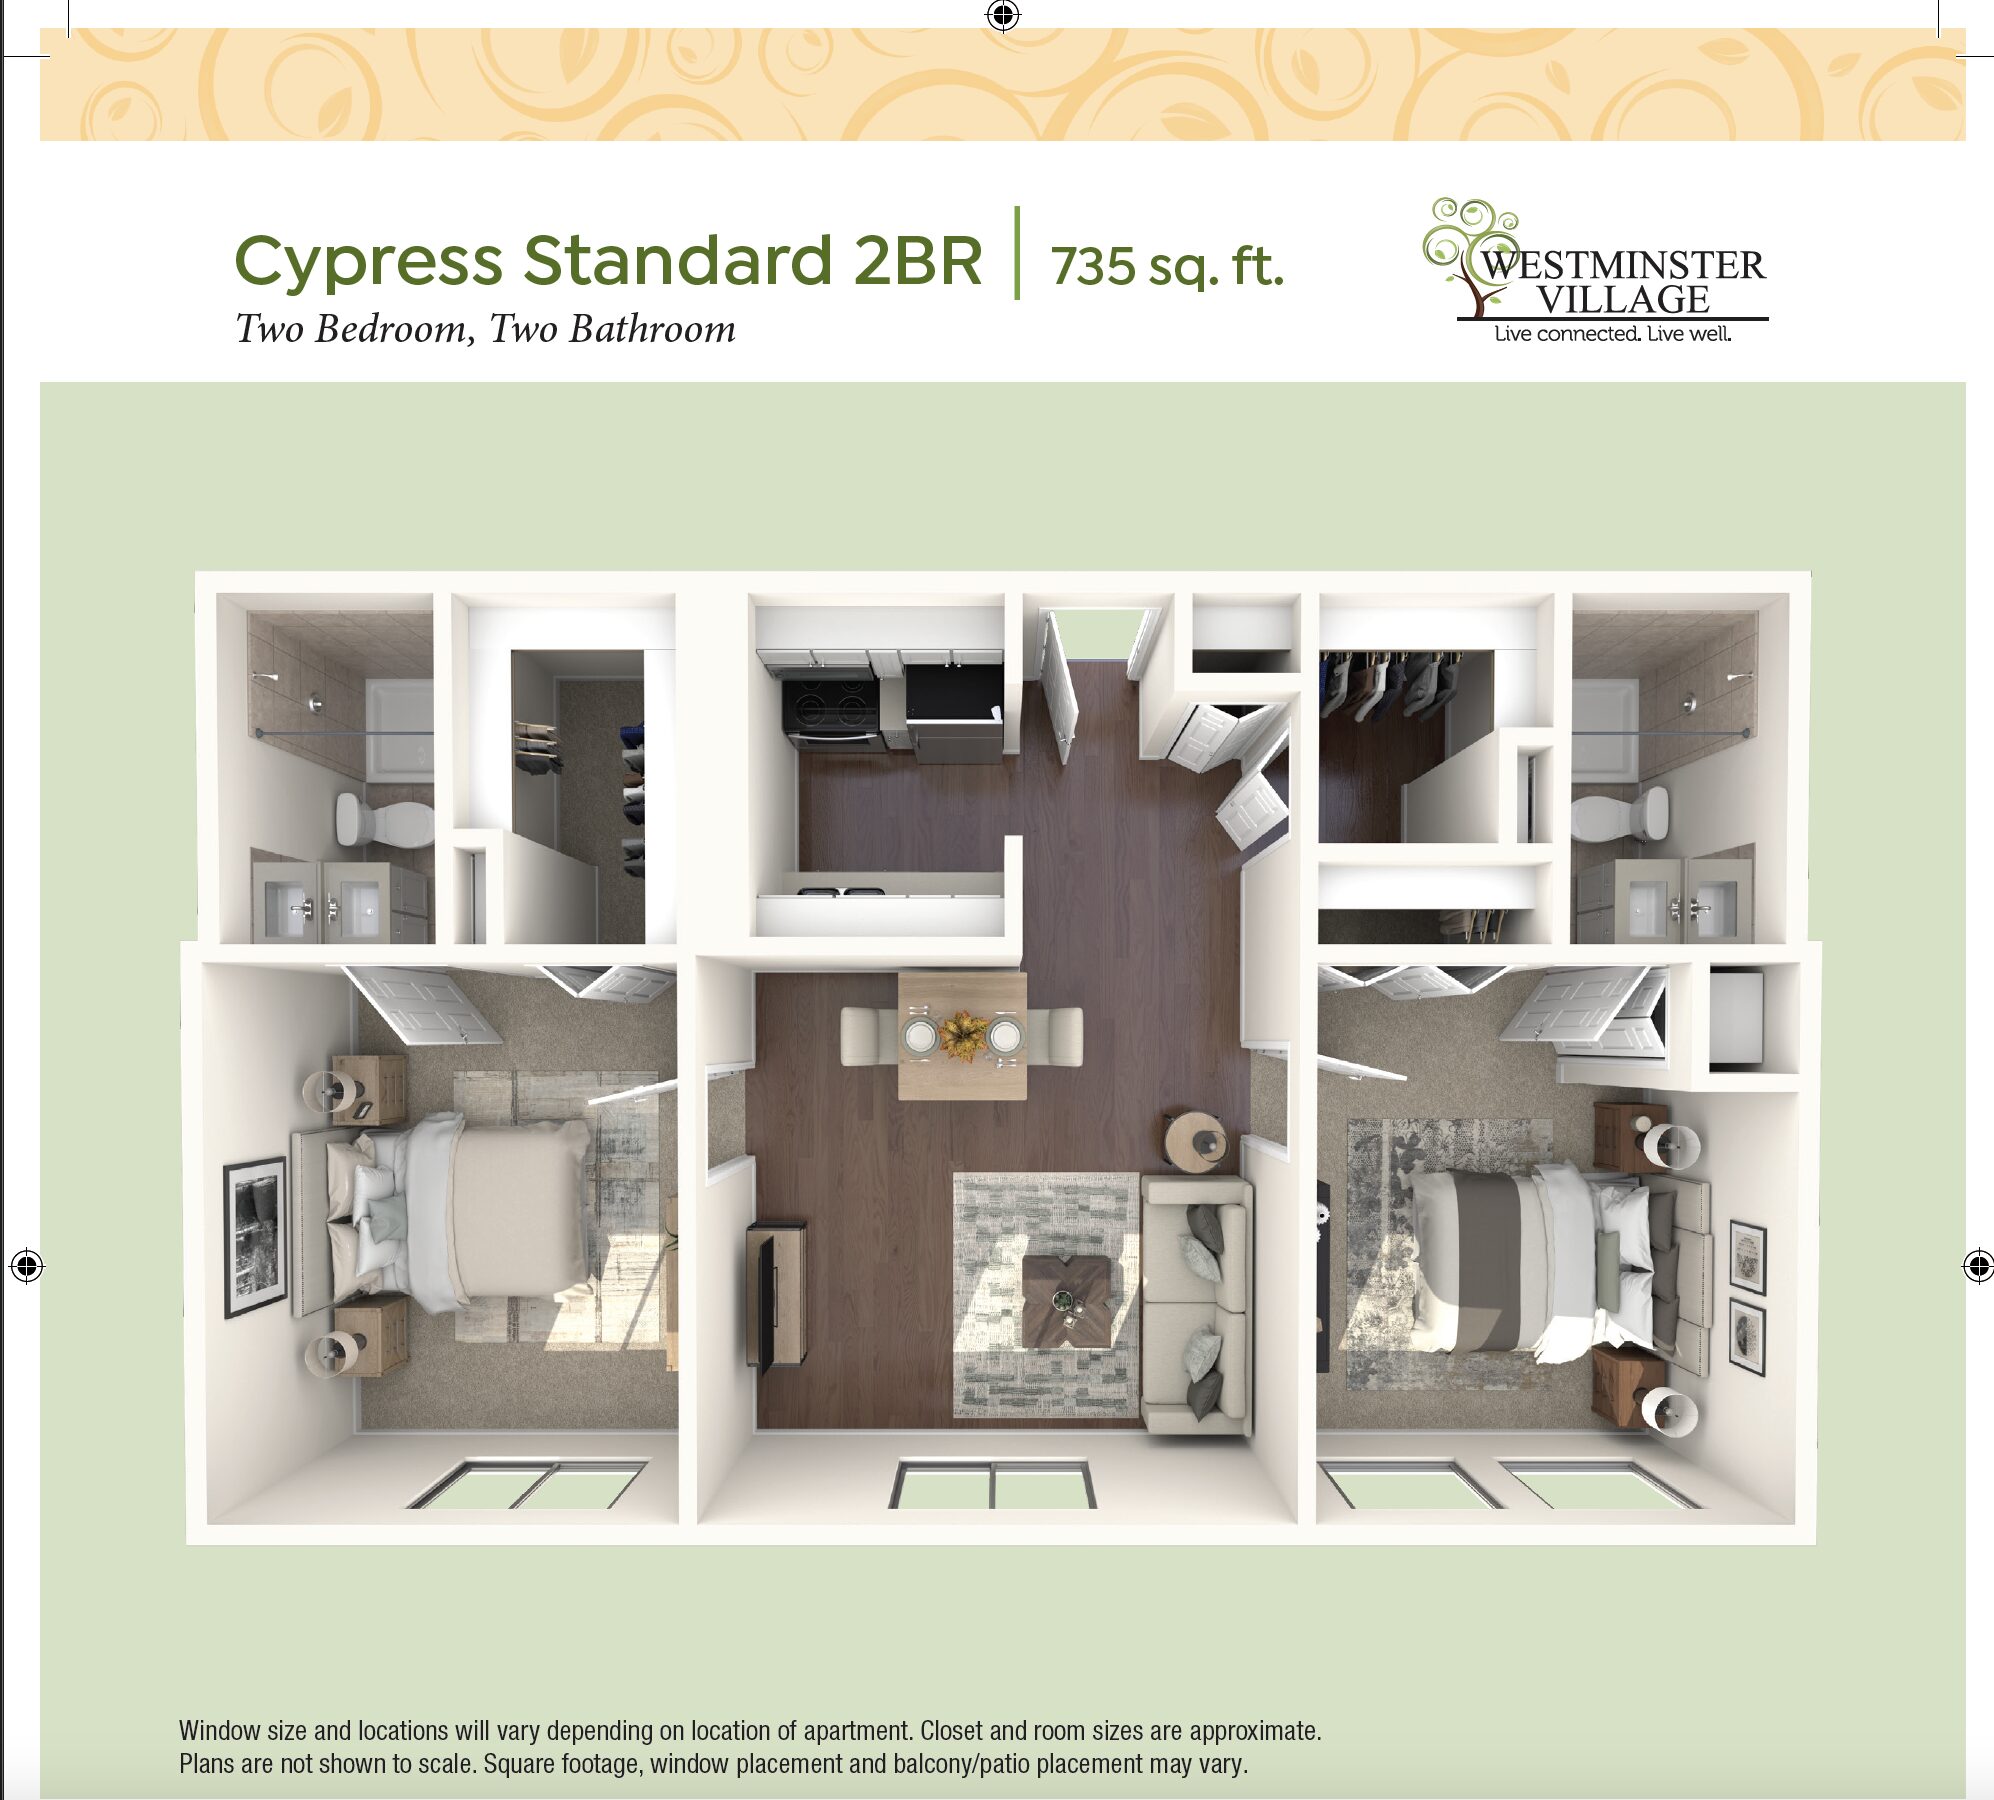 Assited Living Cypress Standard 2BR Floorplan